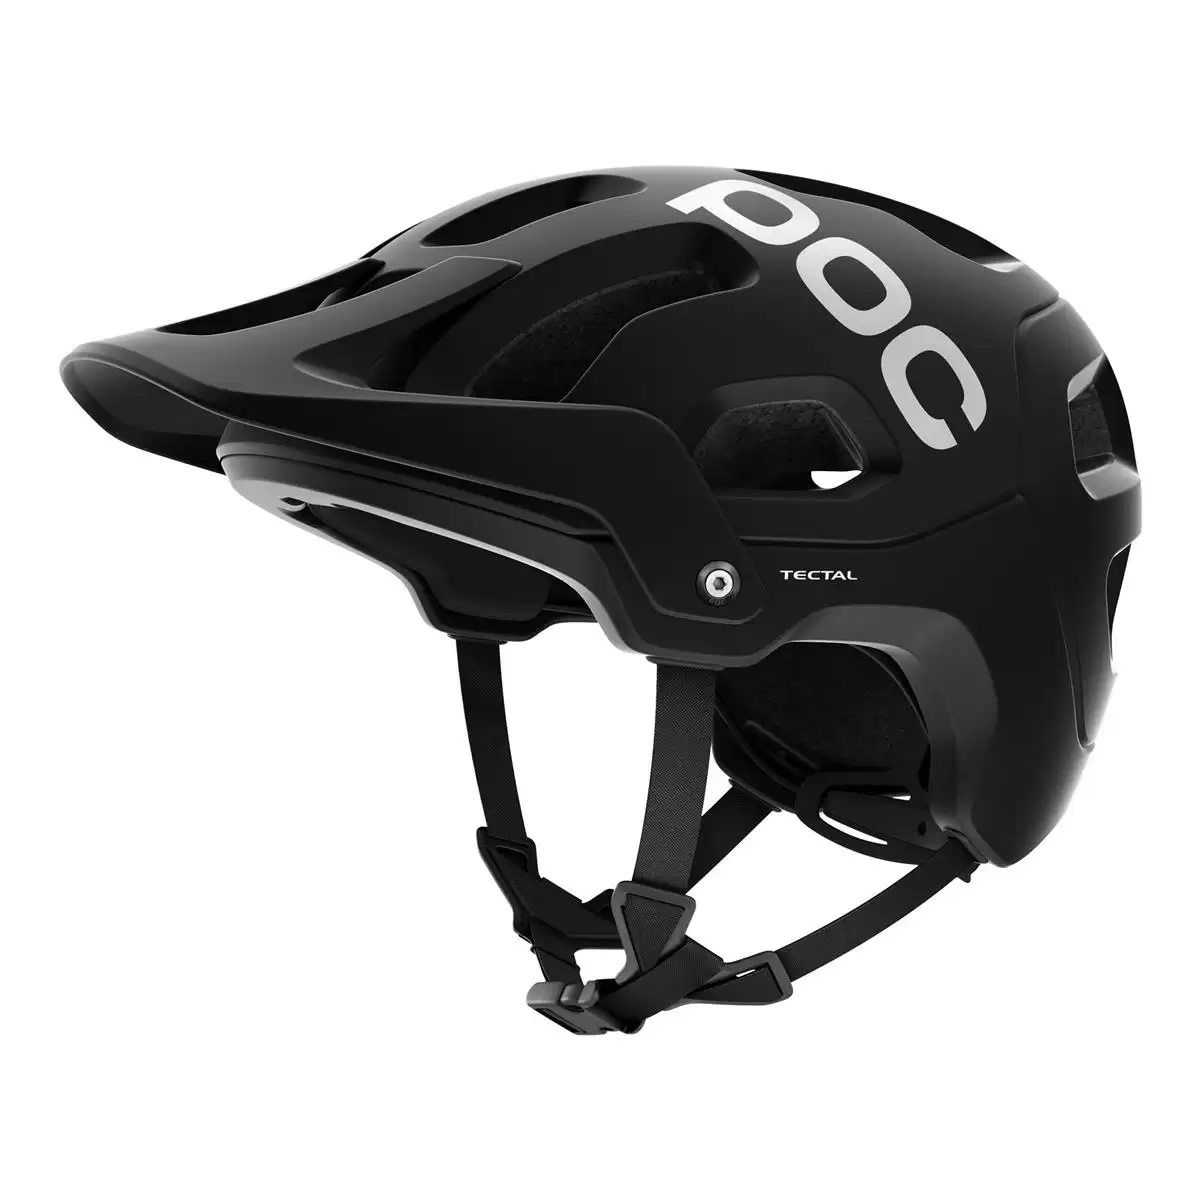 Enduro helmet Tectal black size M-L (55-58cm) - image